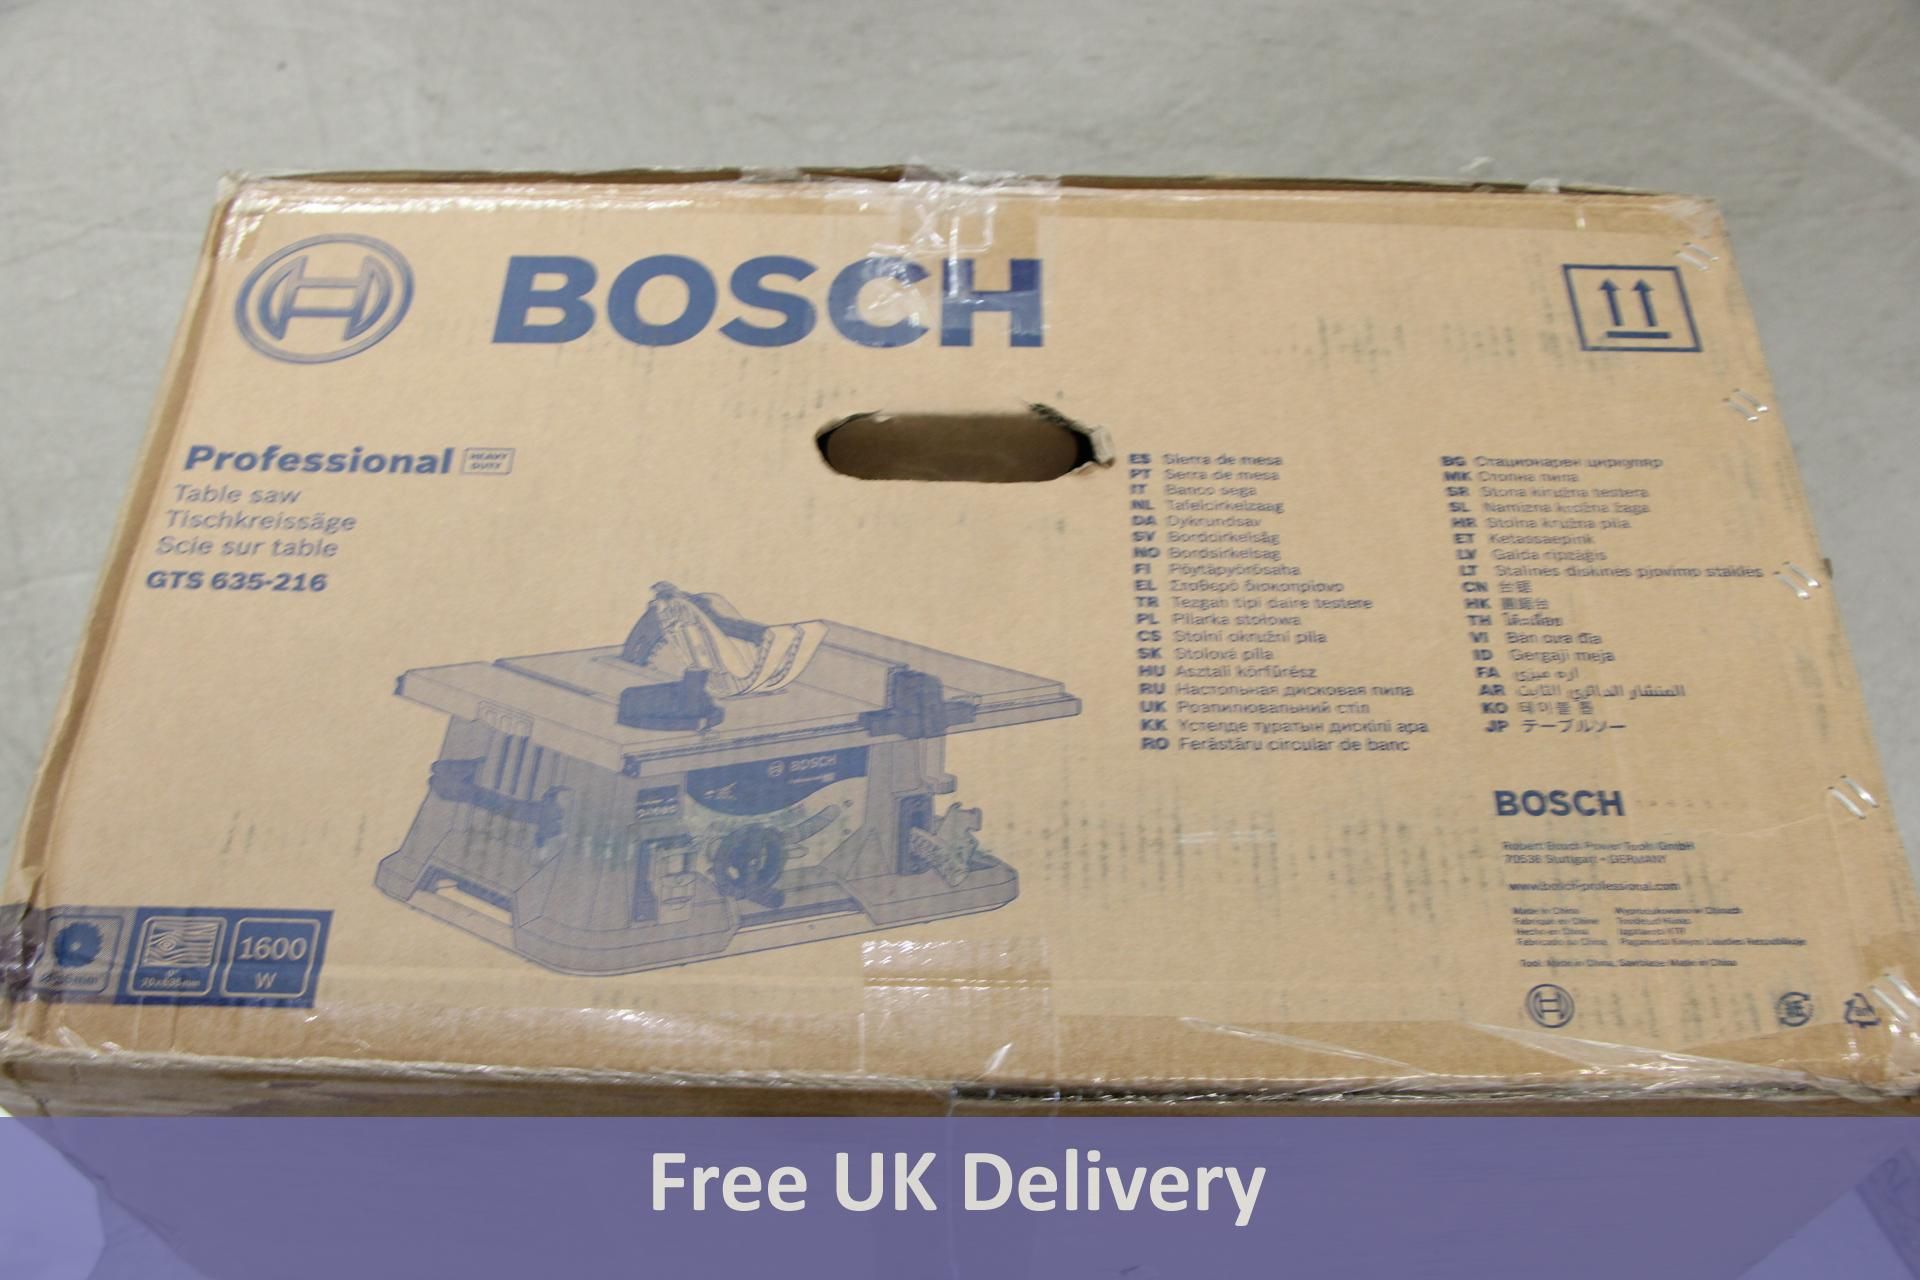 Bosch GTS 635-216 Heavy Duty Professional Table Saw